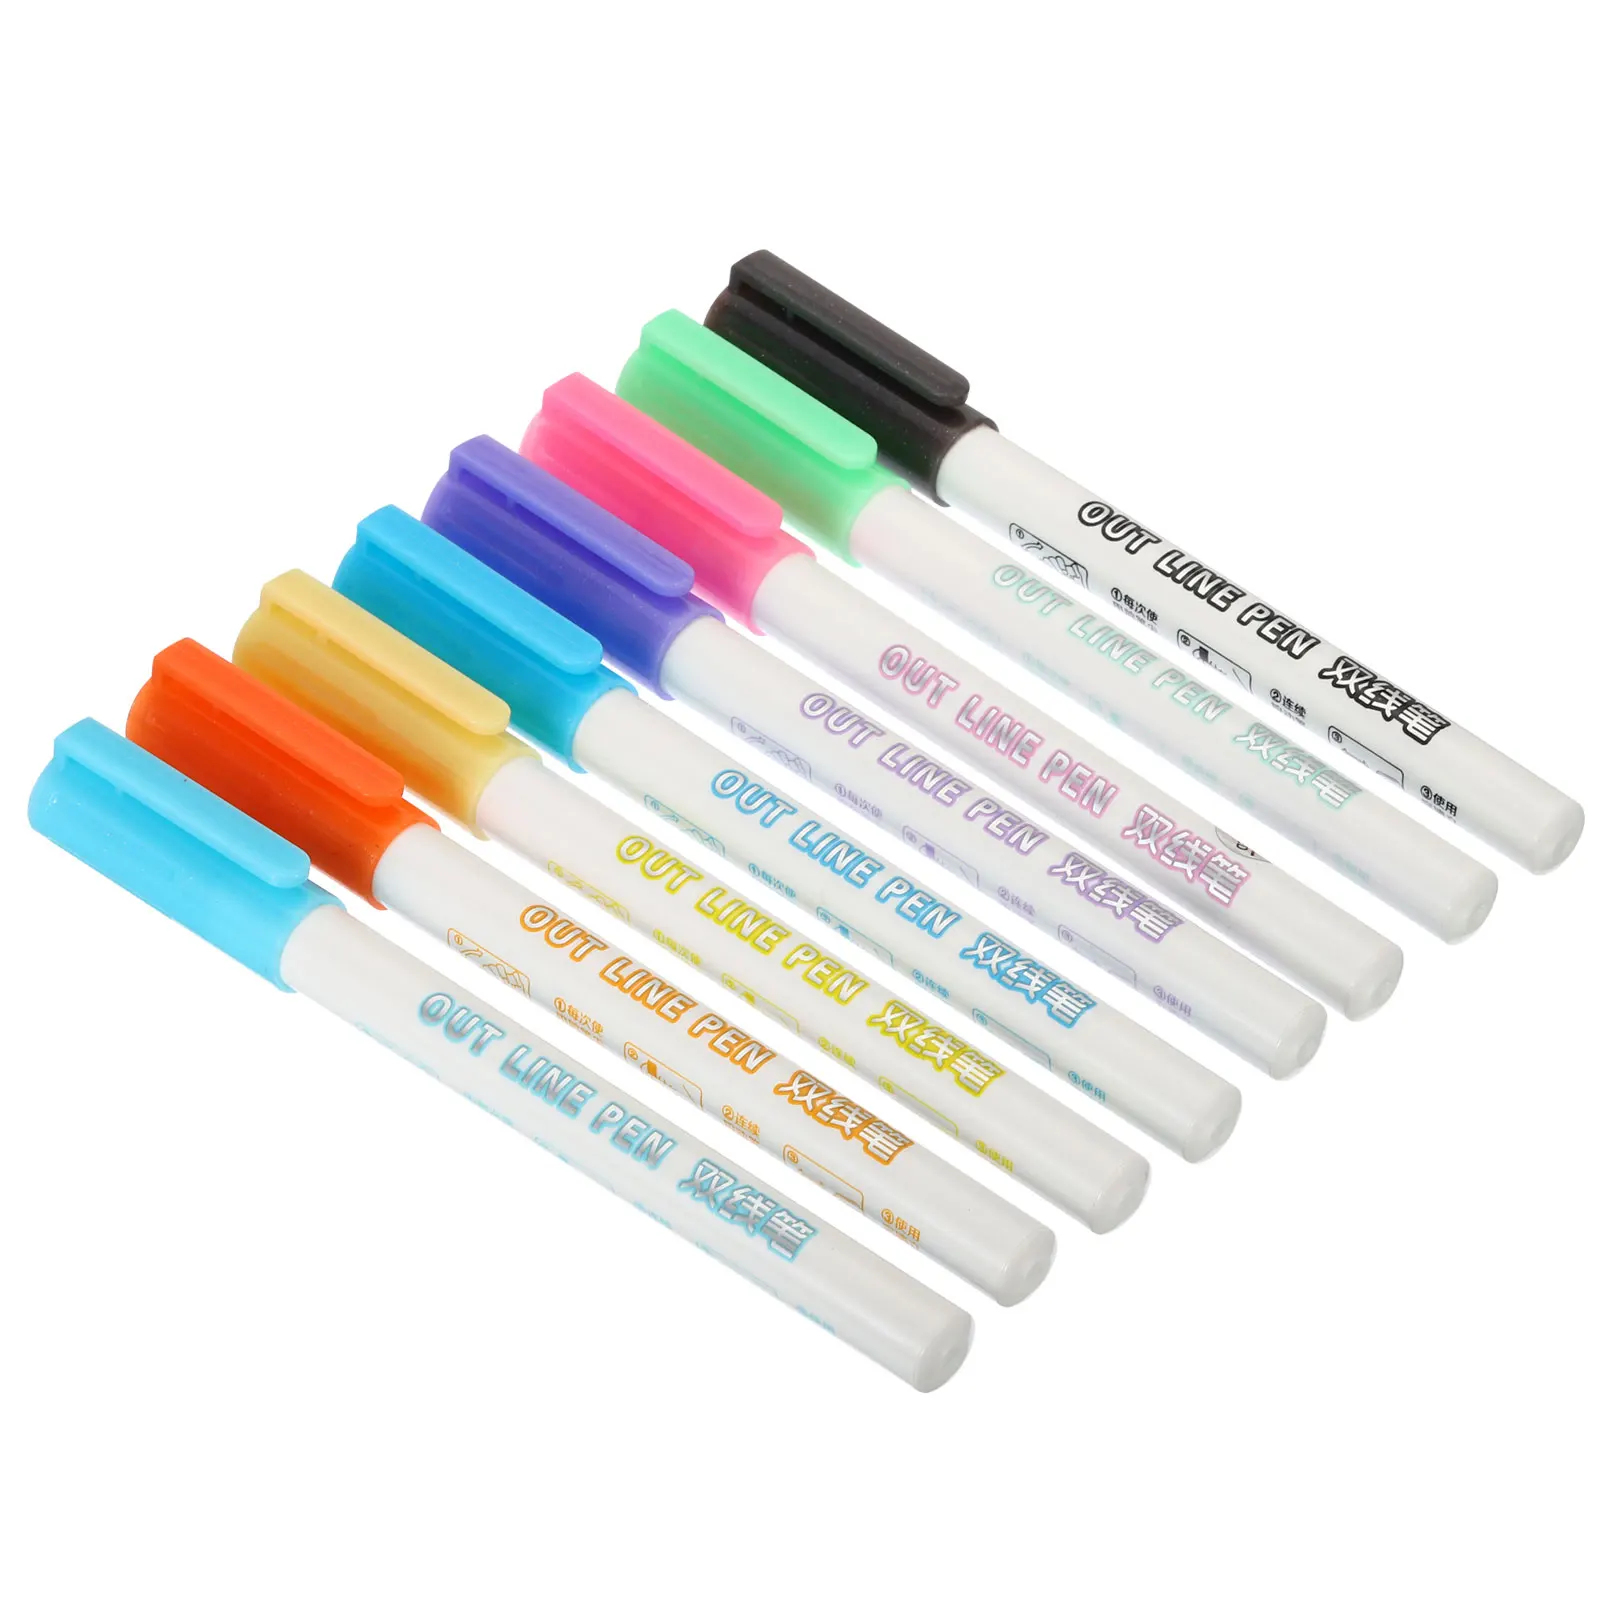 

8 Colors Double Line Outline Pen Set 2mm Nib Metallic Color Highlighter DIY Marker Pen For Art Painting Writing School Supplies